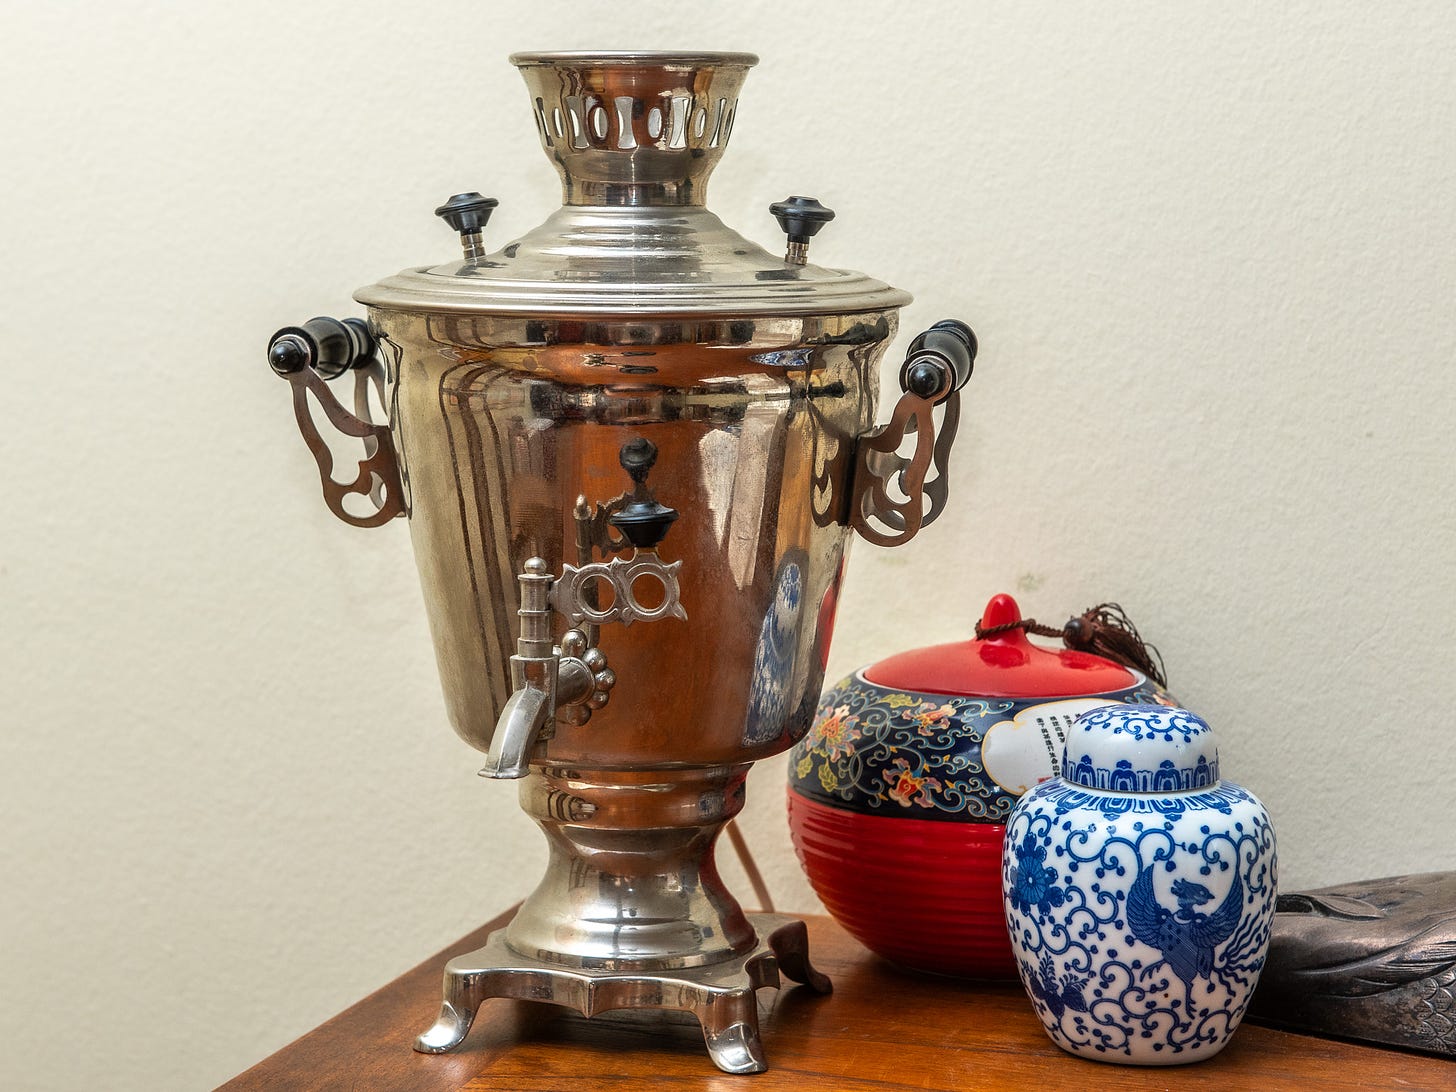 ID: Soviet era electric tea samovar